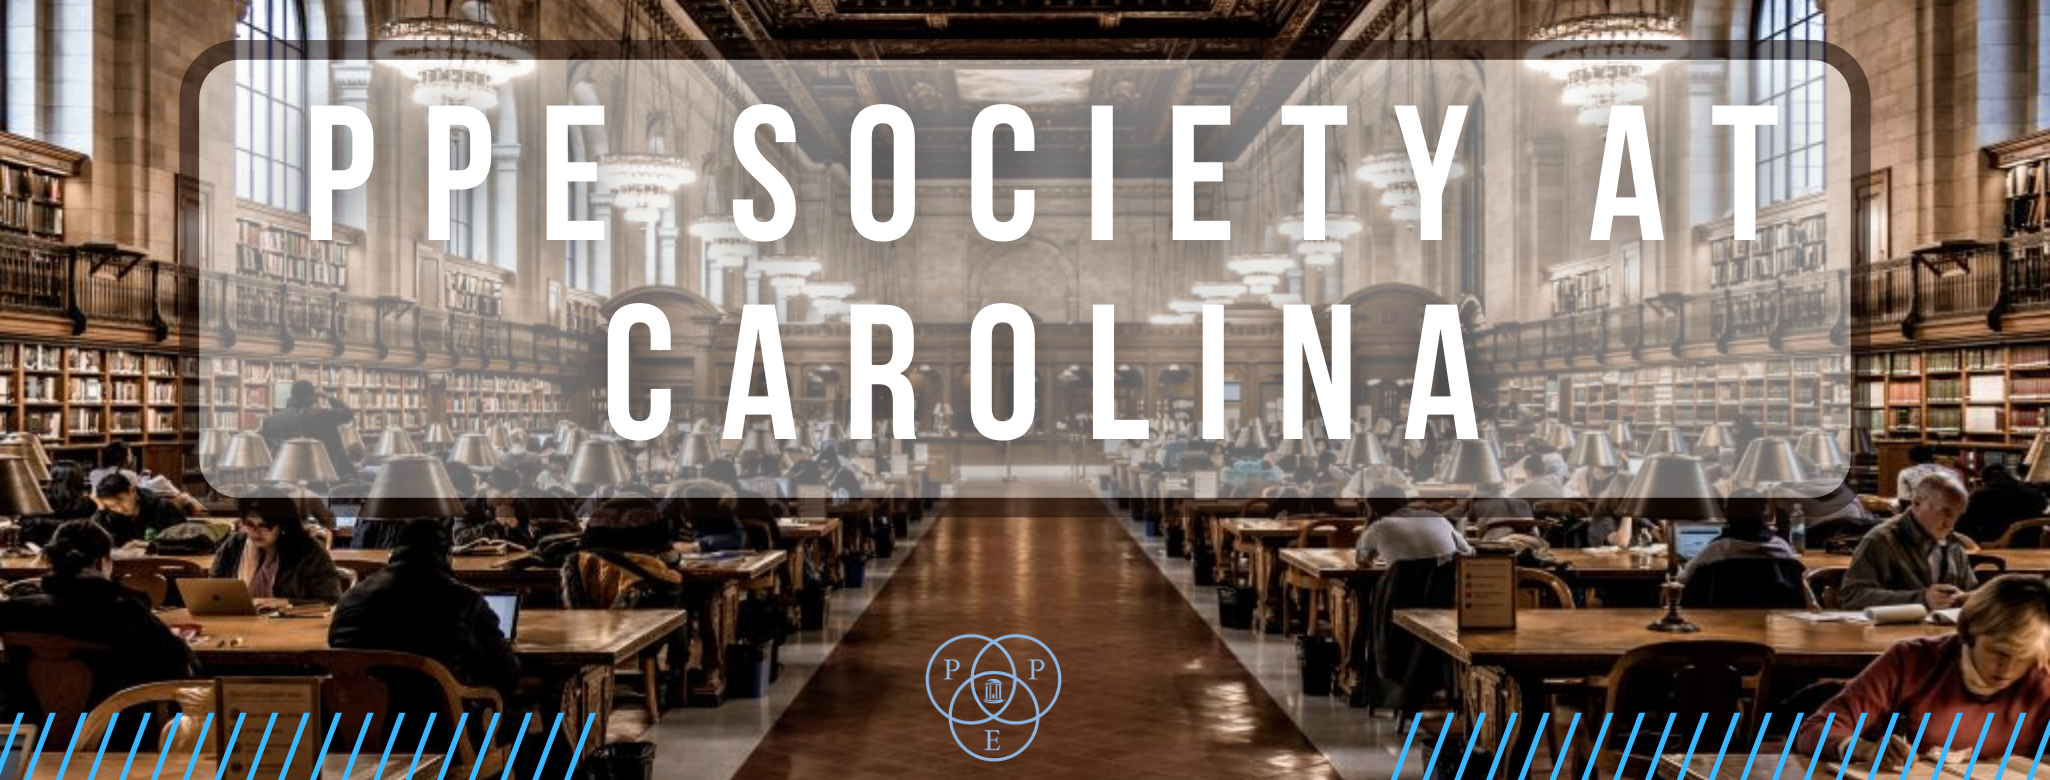 Join the PPE Society at Carolina